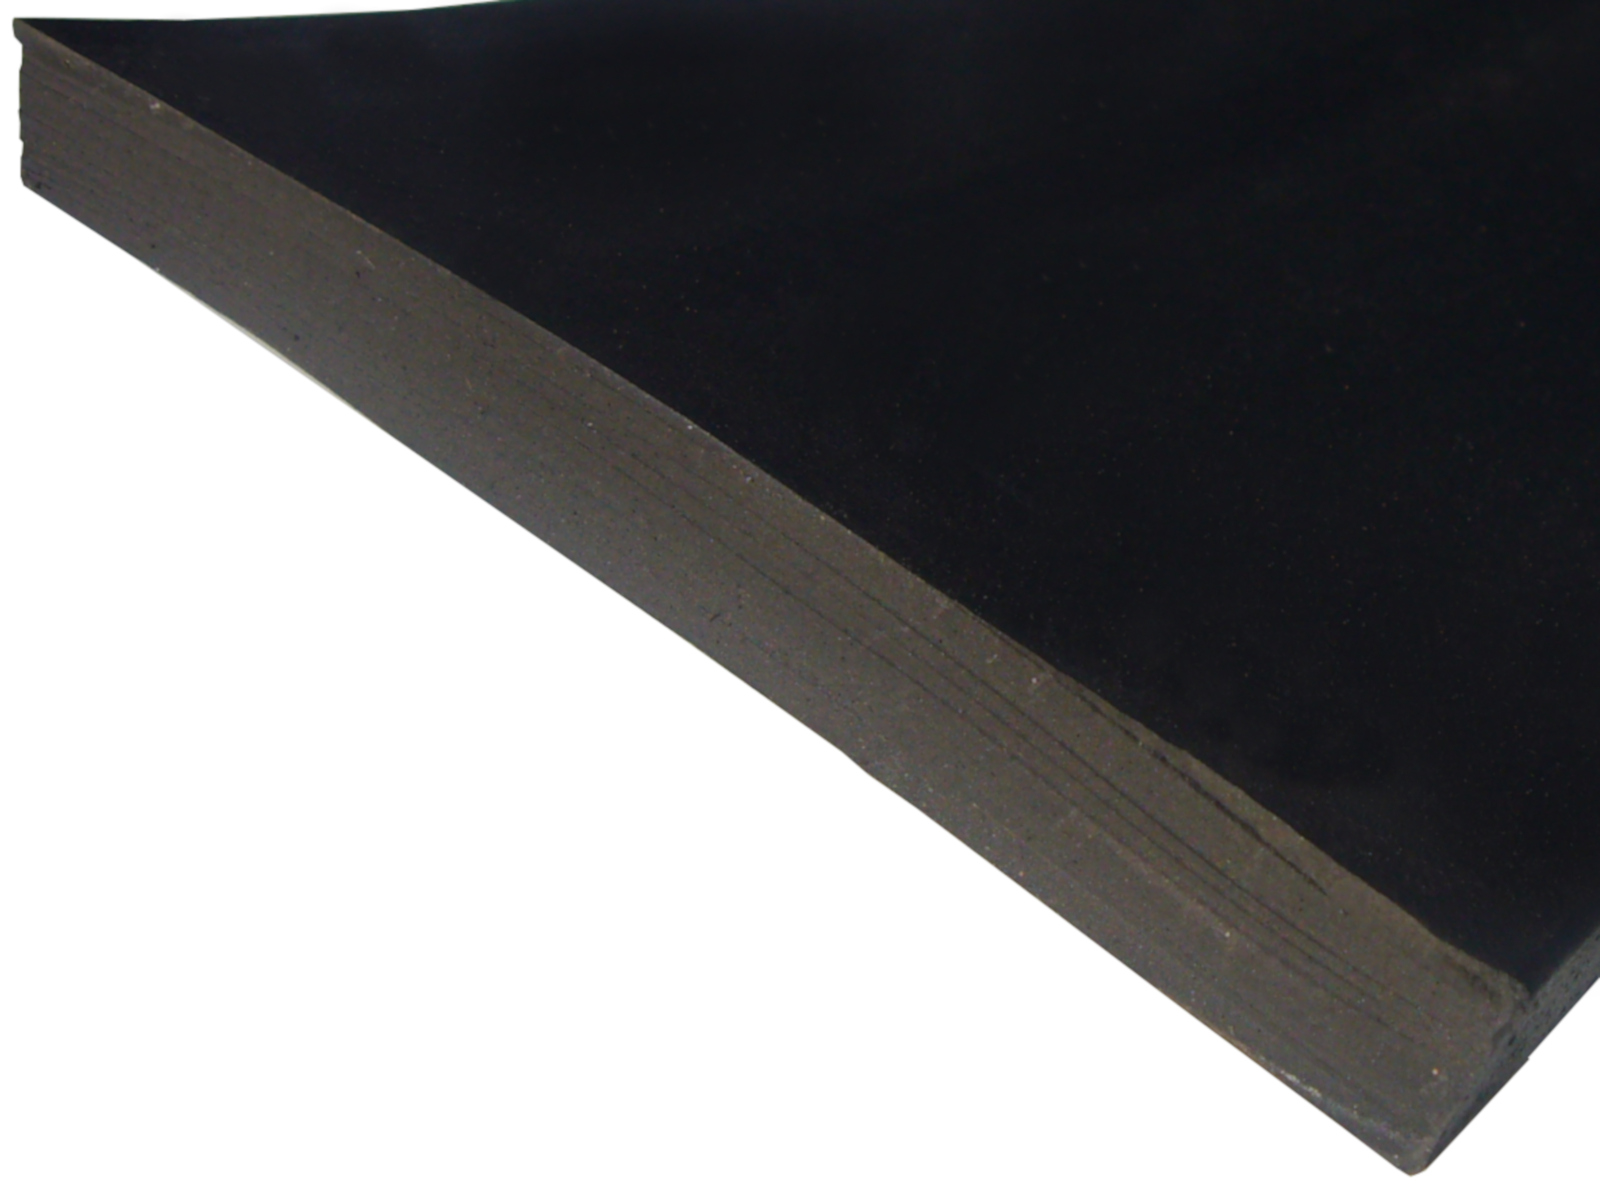 Abstreifgummi 100 x 10 mm schwarz 60-65 SH Seitenführungsgummi Förderband Gummi